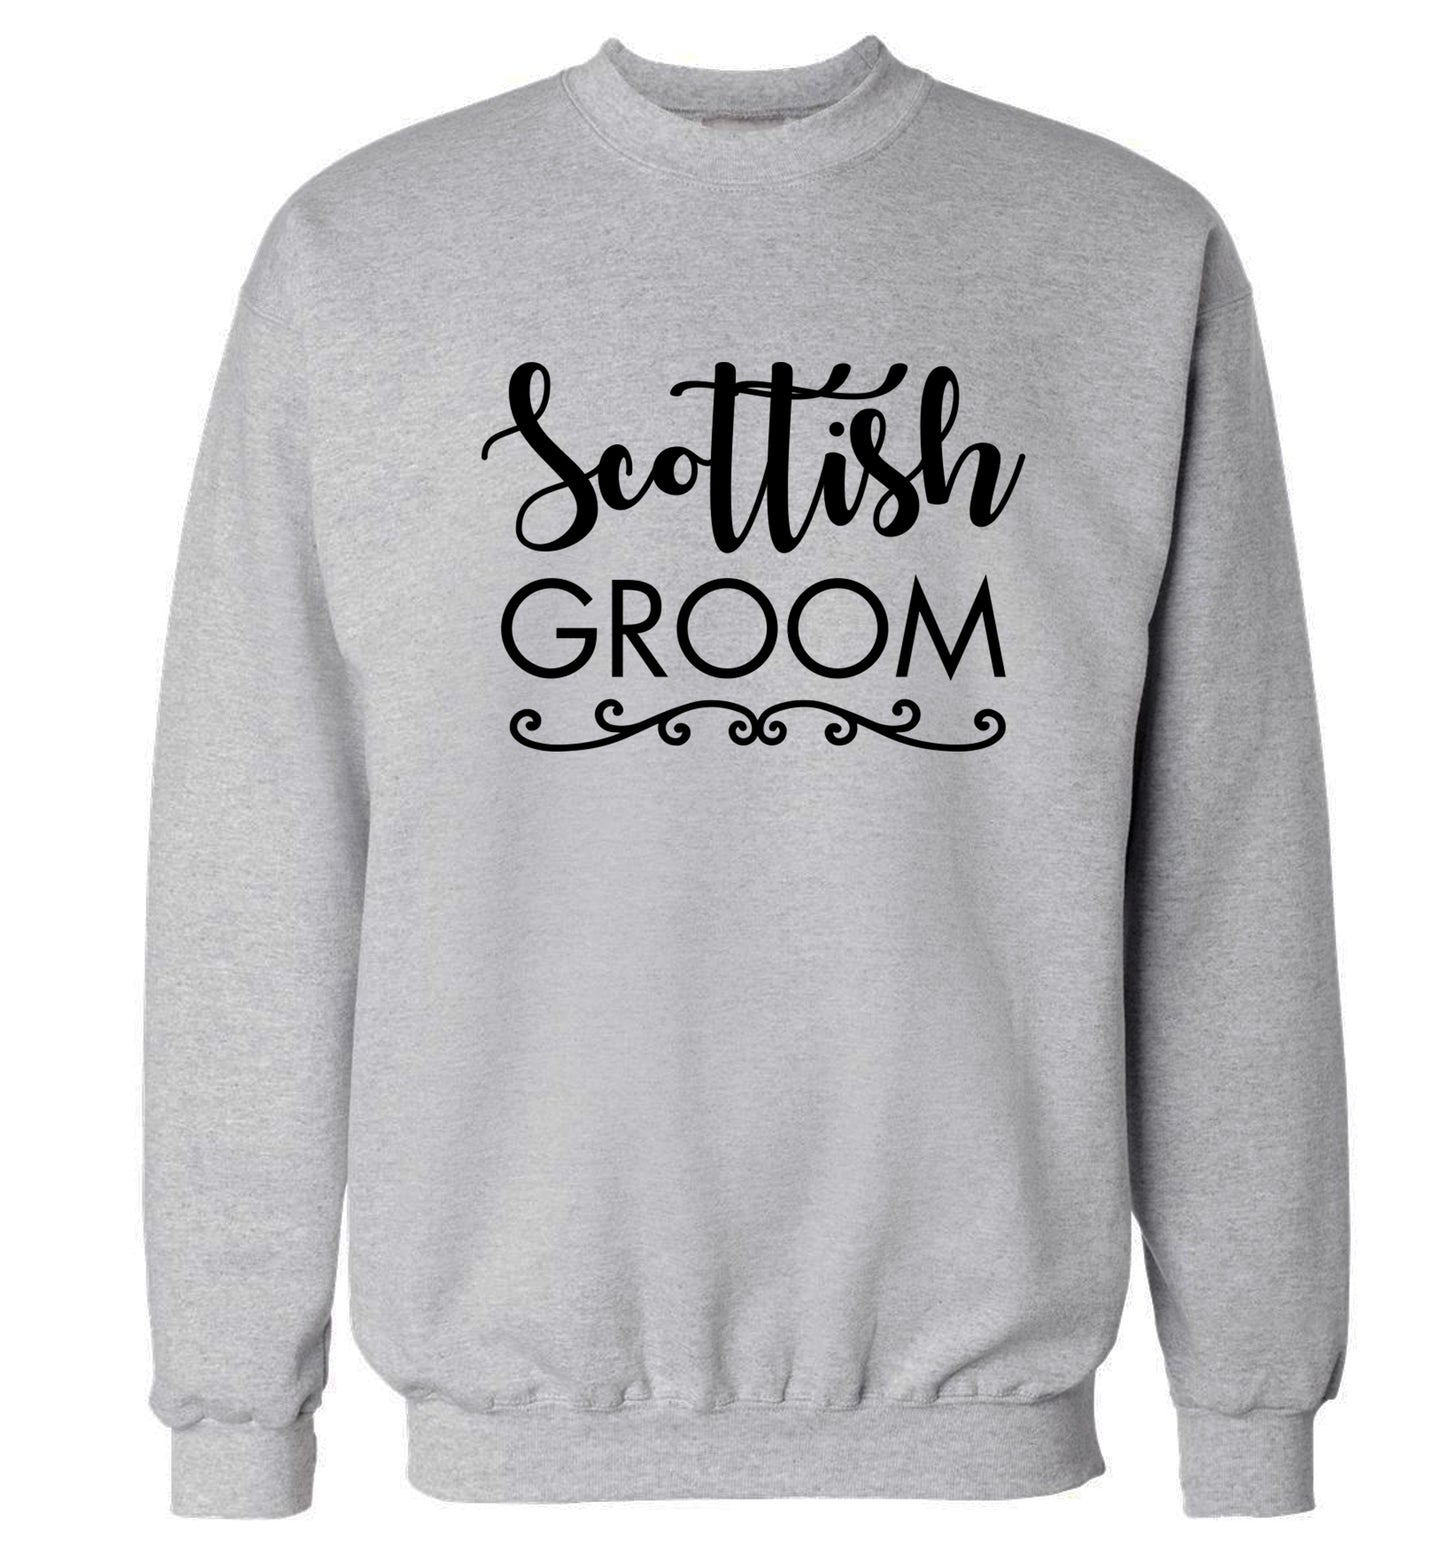 Scottish groom Adult's unisex grey Sweater 2XL